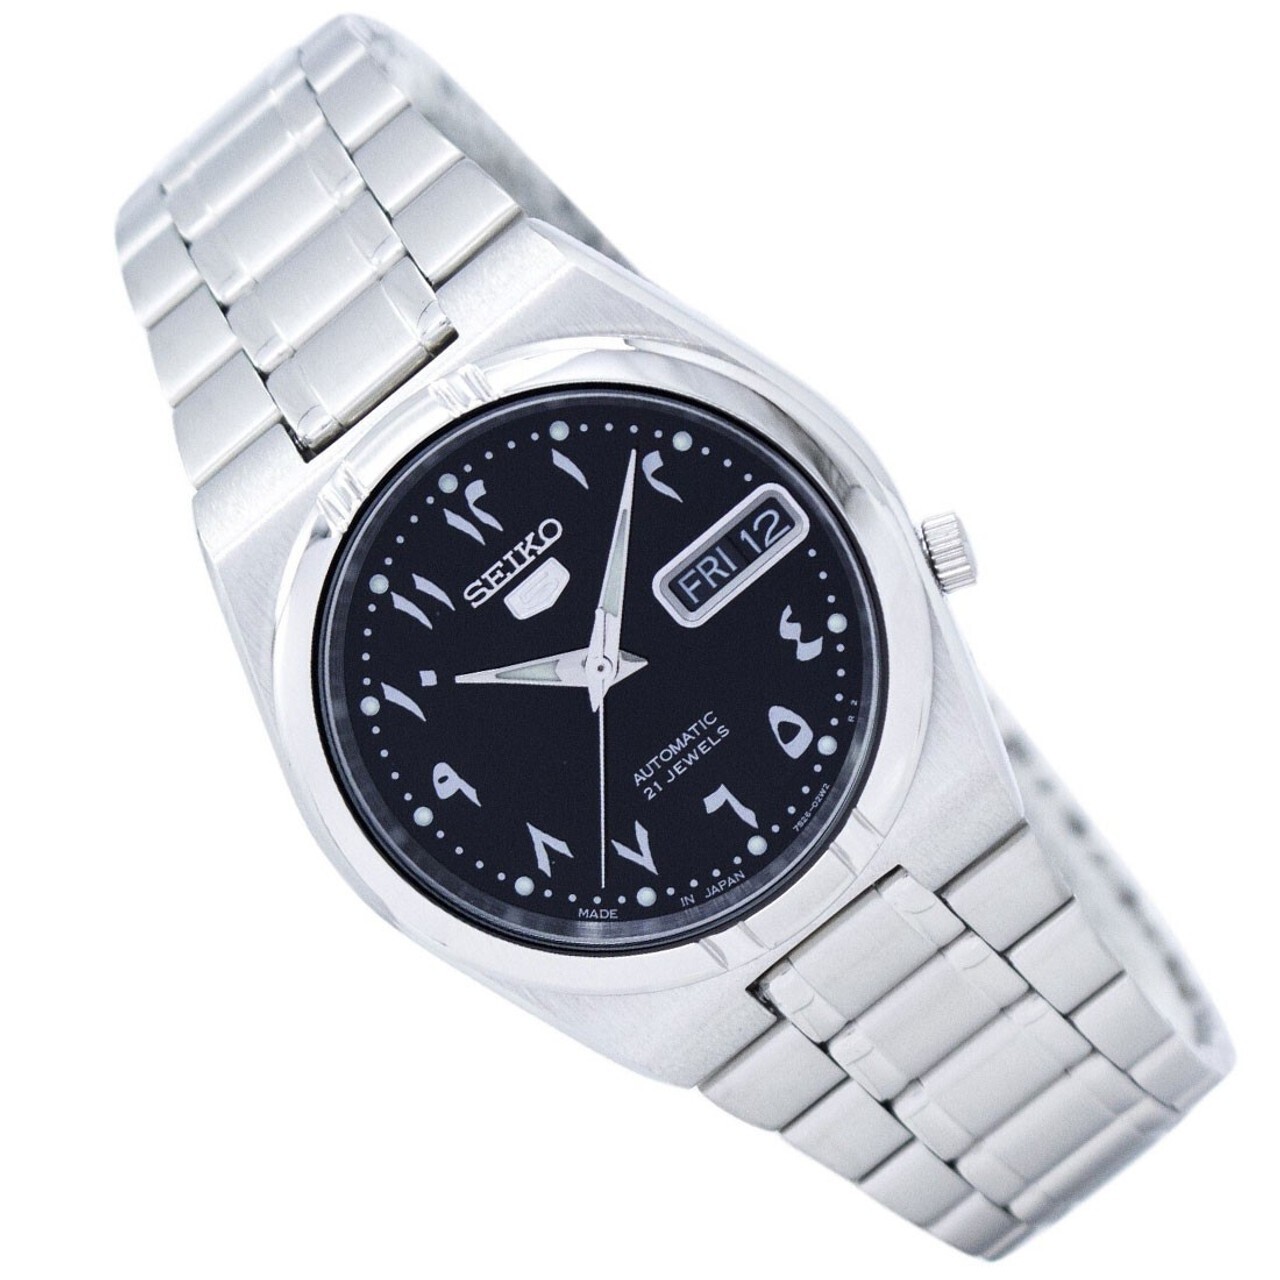 Reloj automático Mujer Seiko 5 Arabic Series SNK063J5 34mm Special Gulf Edition dial negro correa de acero MADE IN JAPAN